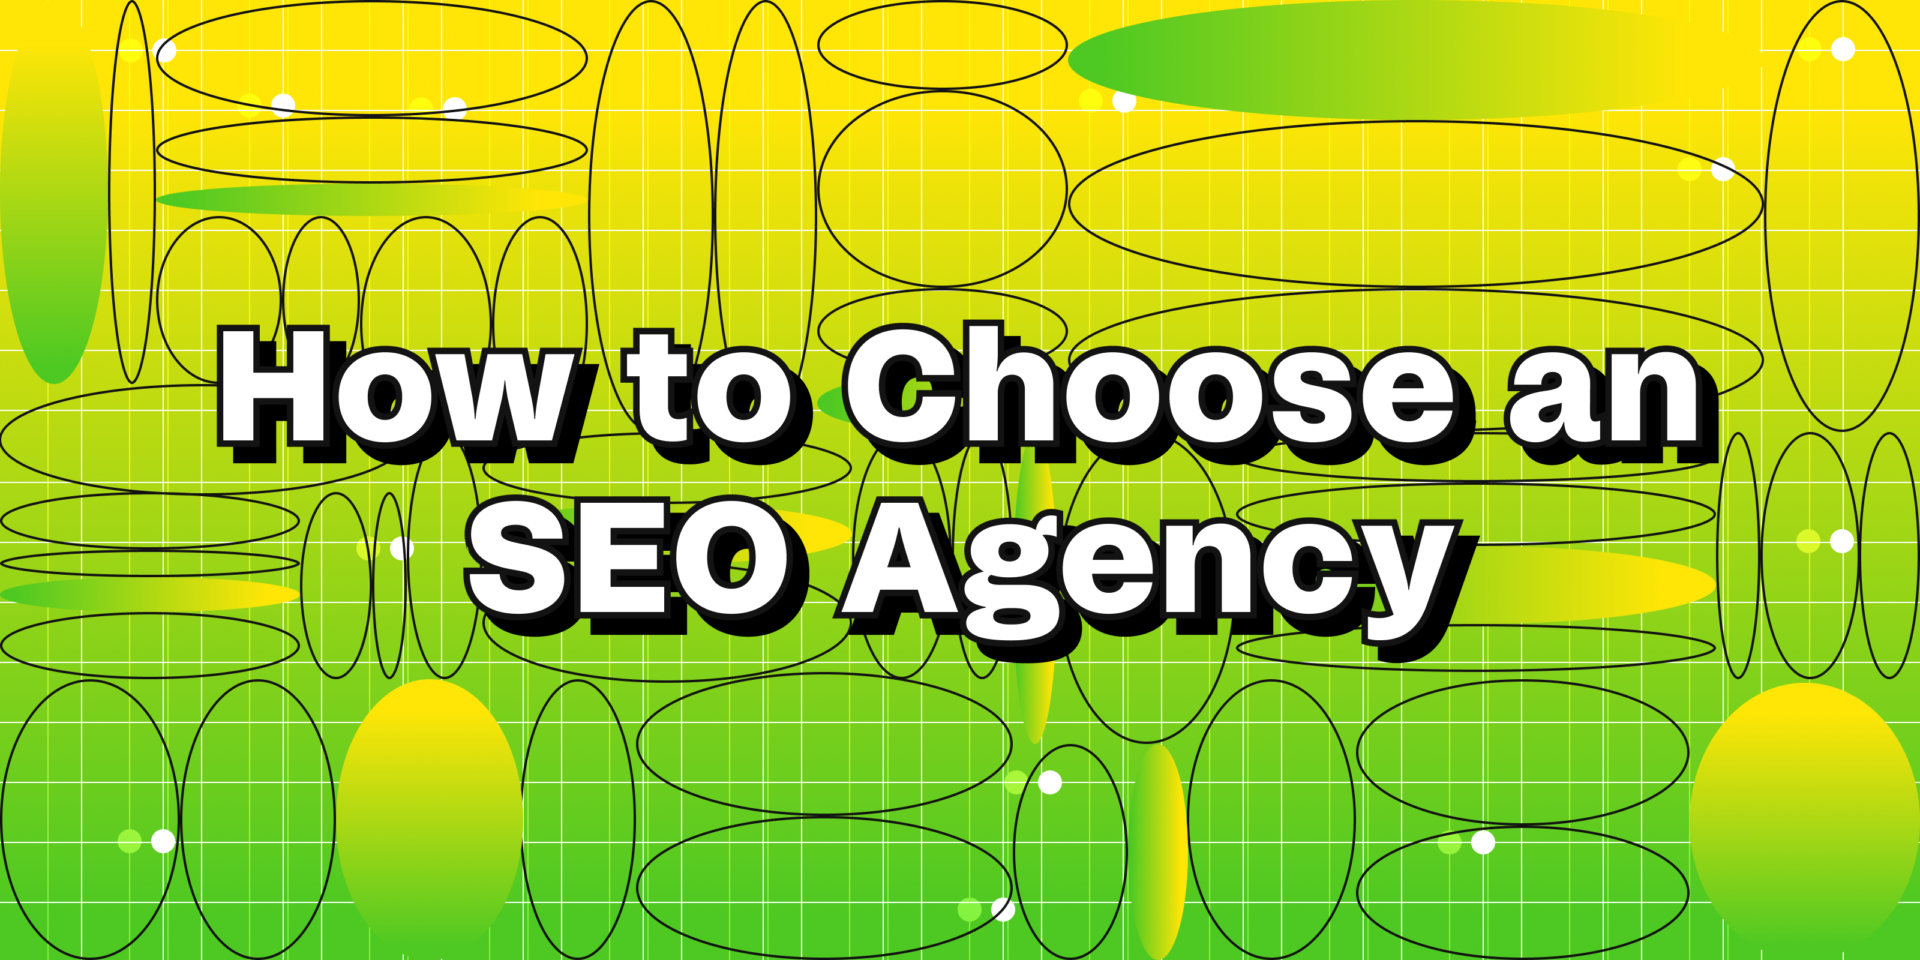 How to choose an SEO agency